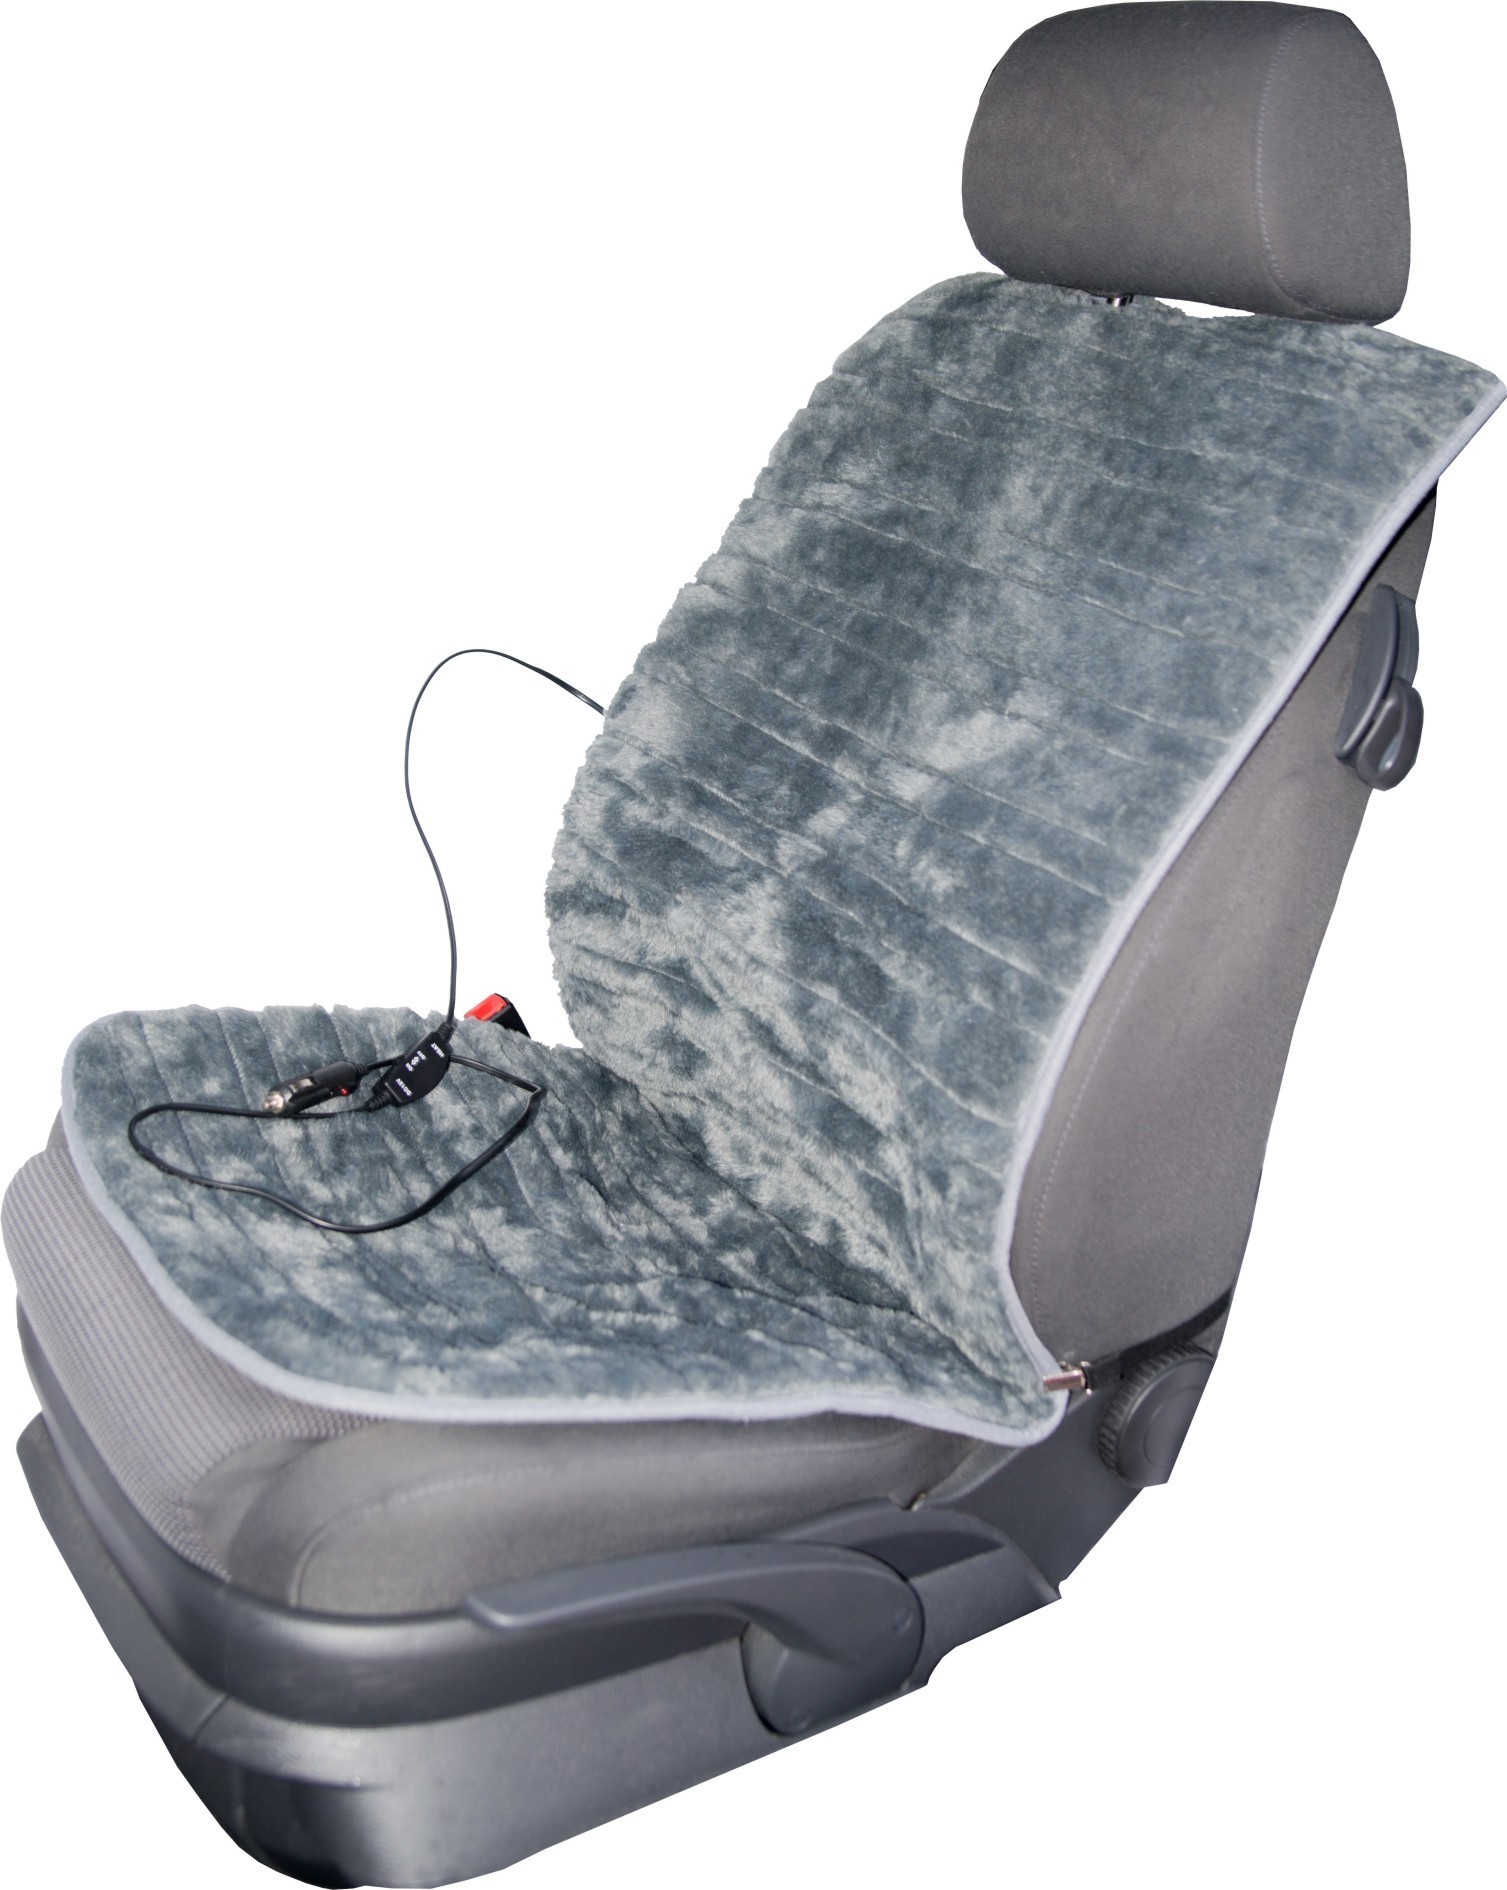 Auto-Sitzheizung Comfort 12 V kaufen bei OBI